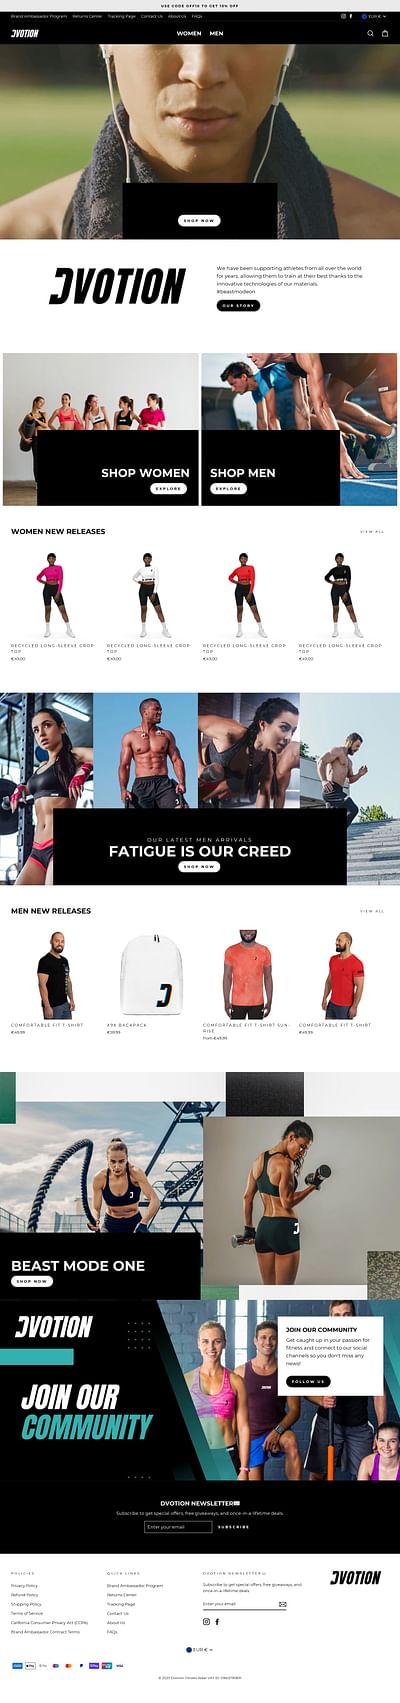 Dvotion Fitness Wear | UI/UX Design & Branding - Marketing